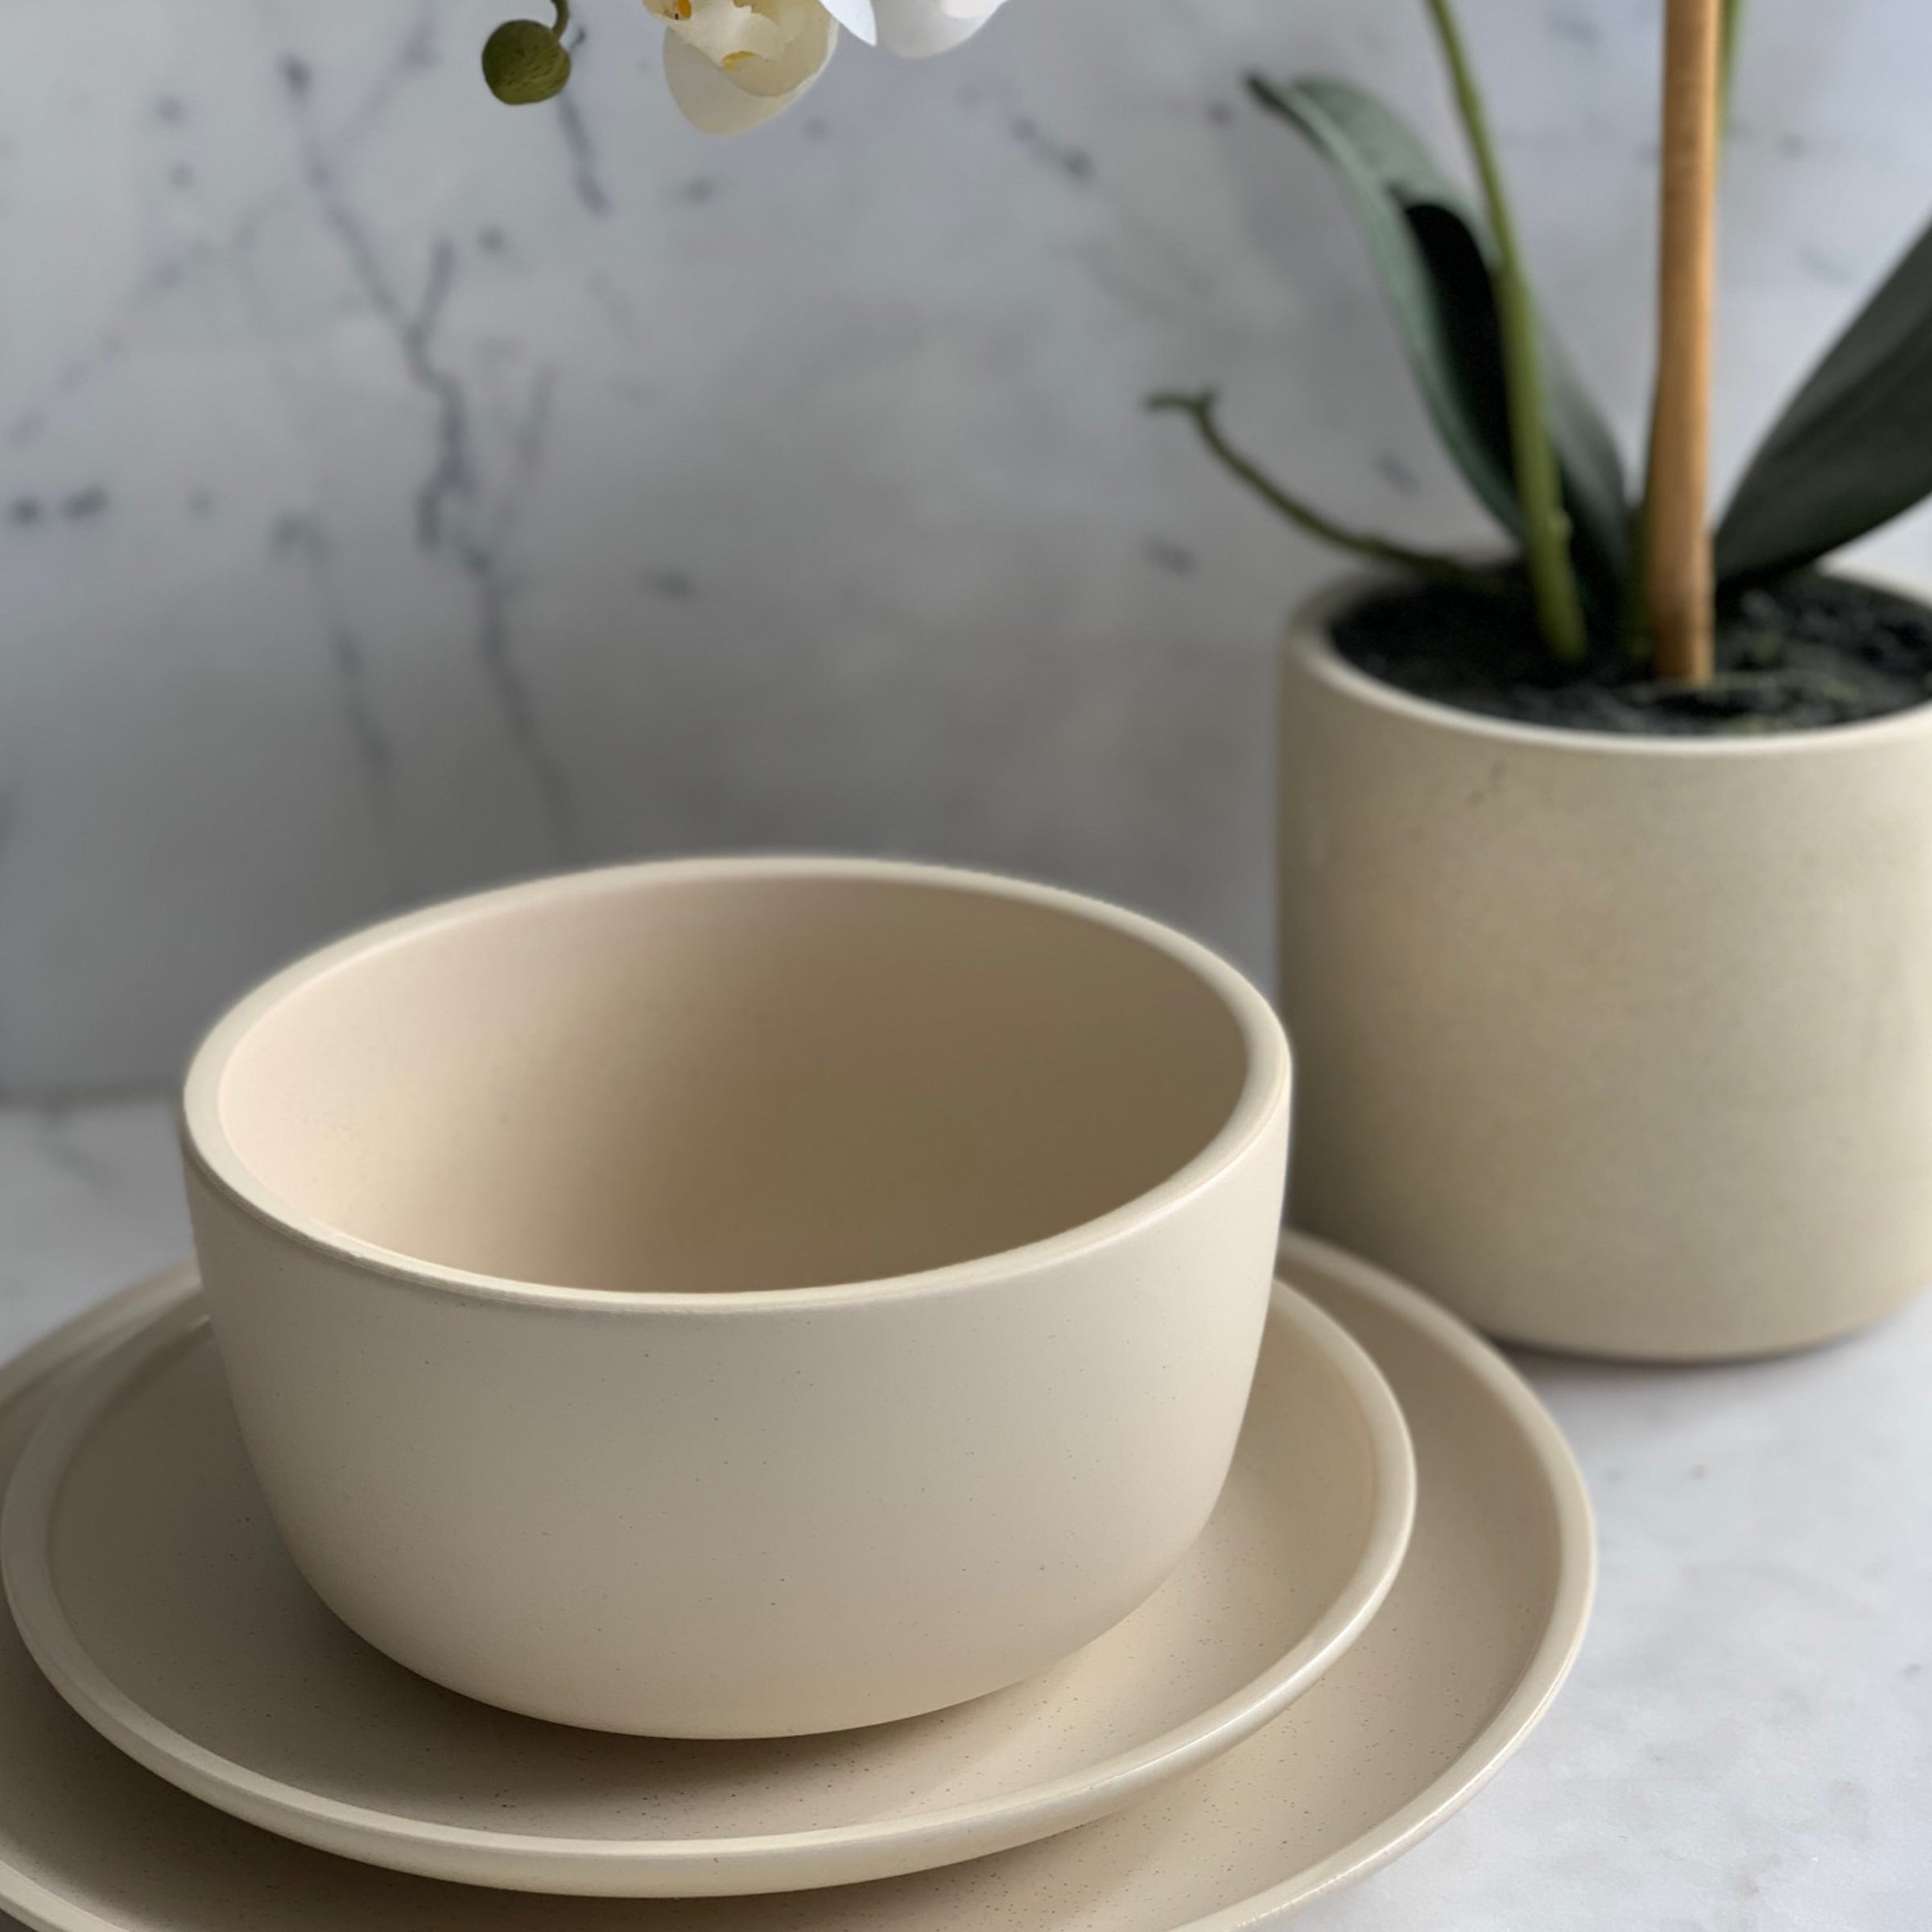 Hall Dinner Bowl - White - Buy Bowls Online at FRANKY'S